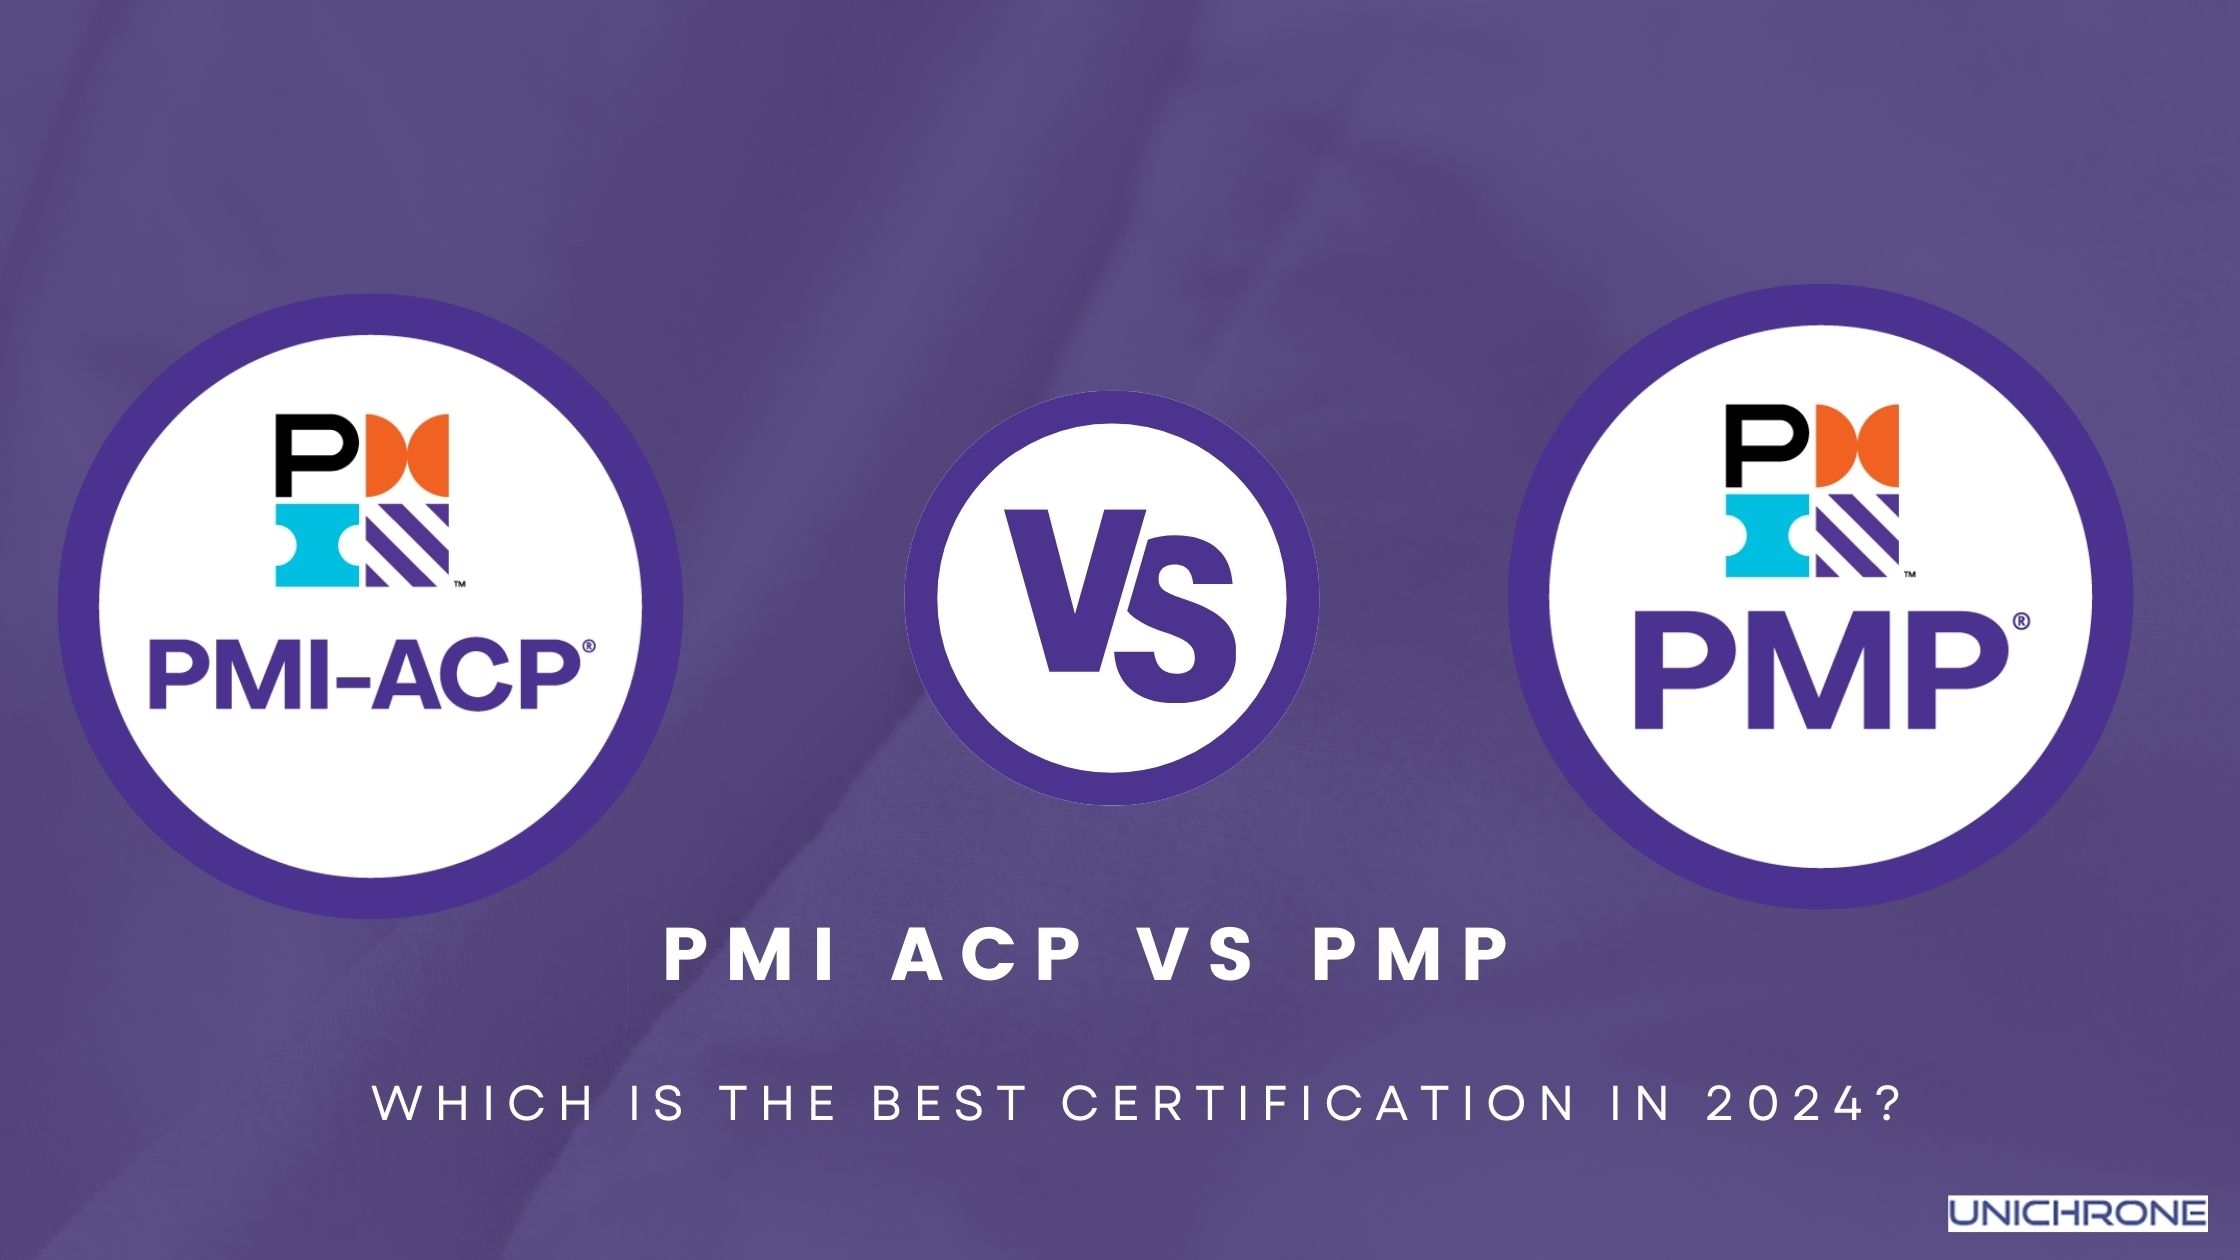 pmi agile certification vs pmp certification, pmi-acp vs pmp

